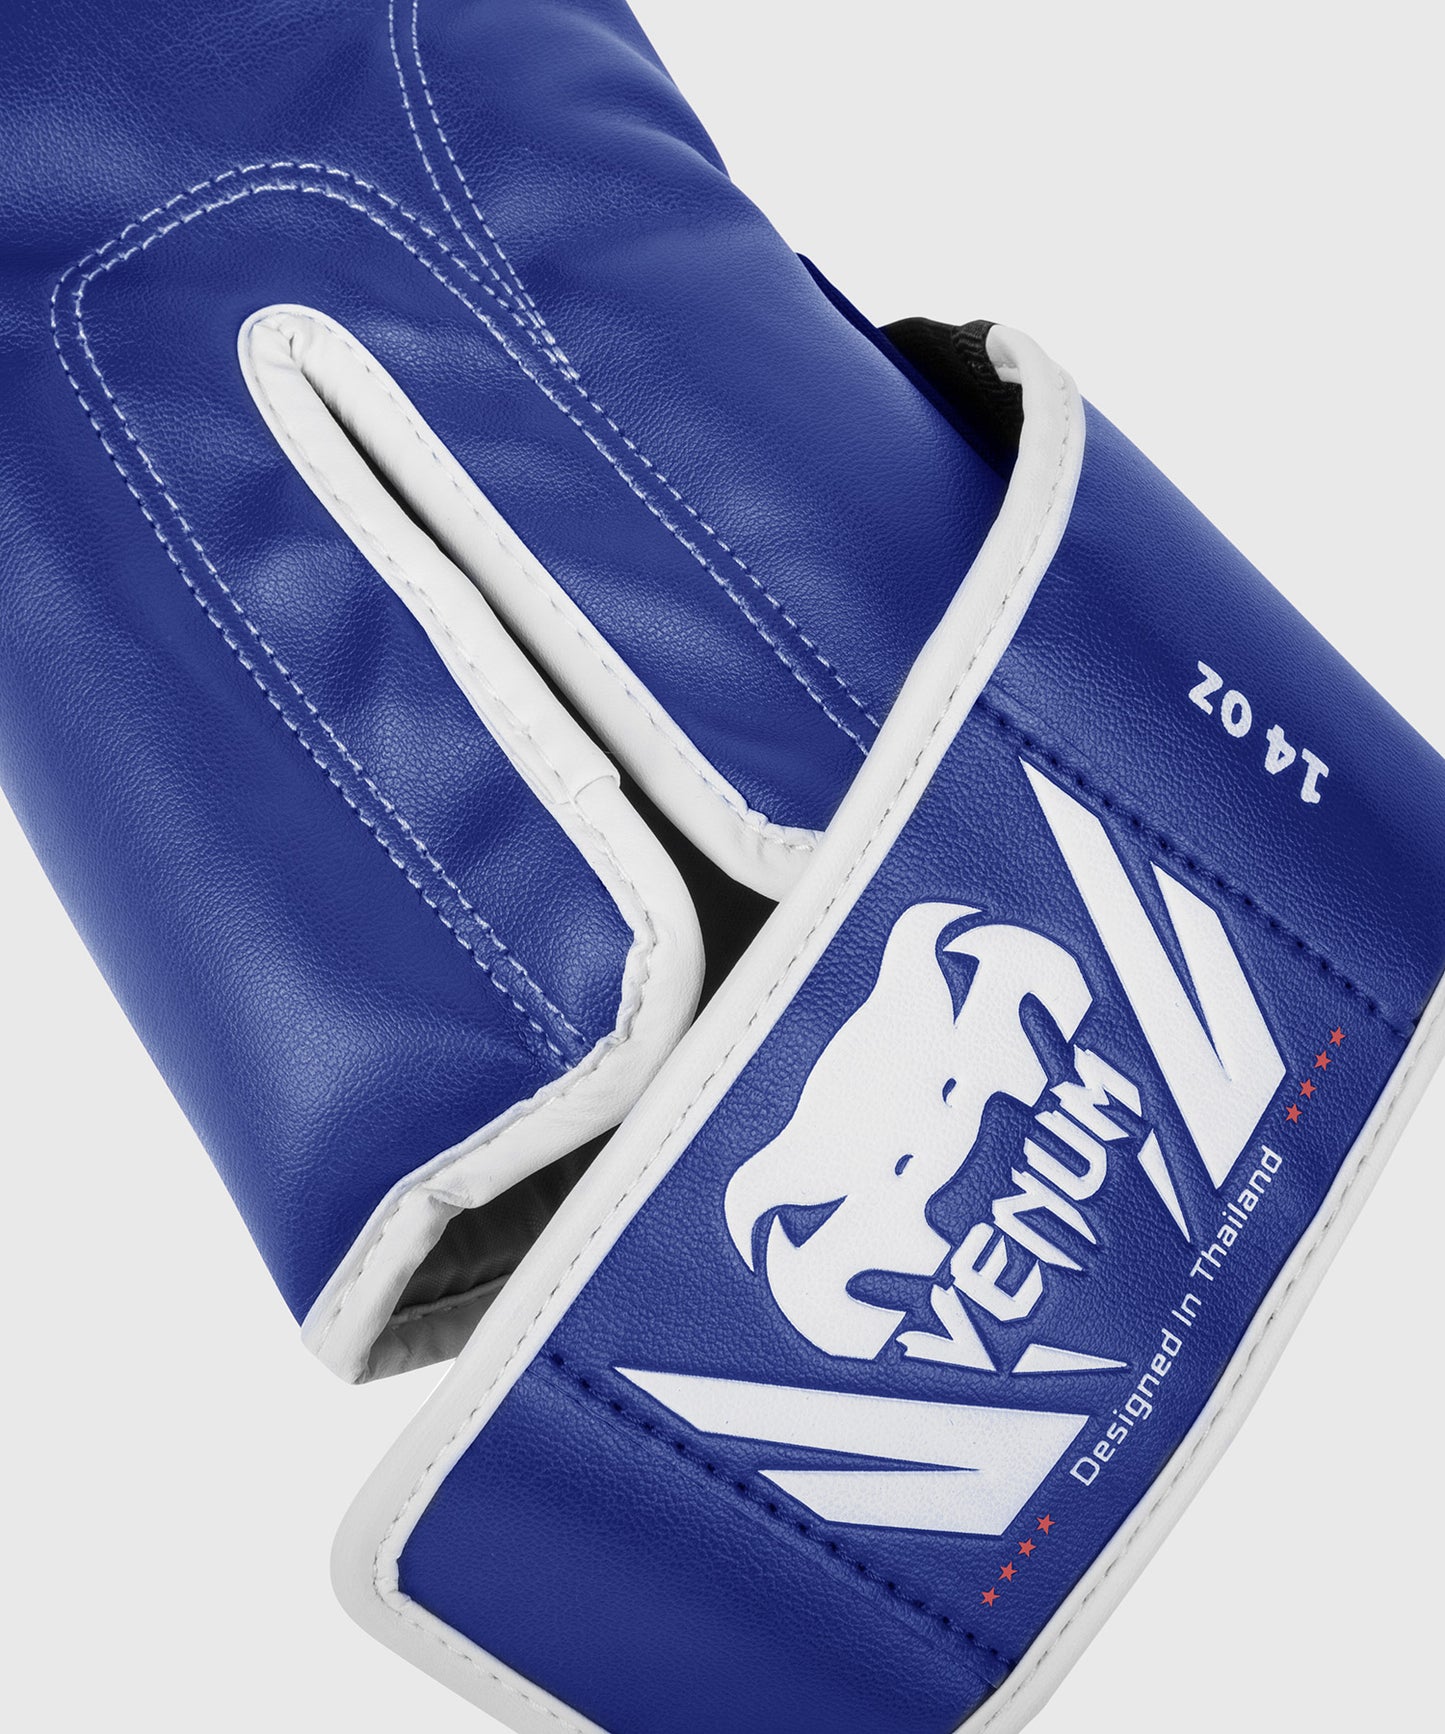 Venum Challenger 2.0 Boxing Gloves - Blue